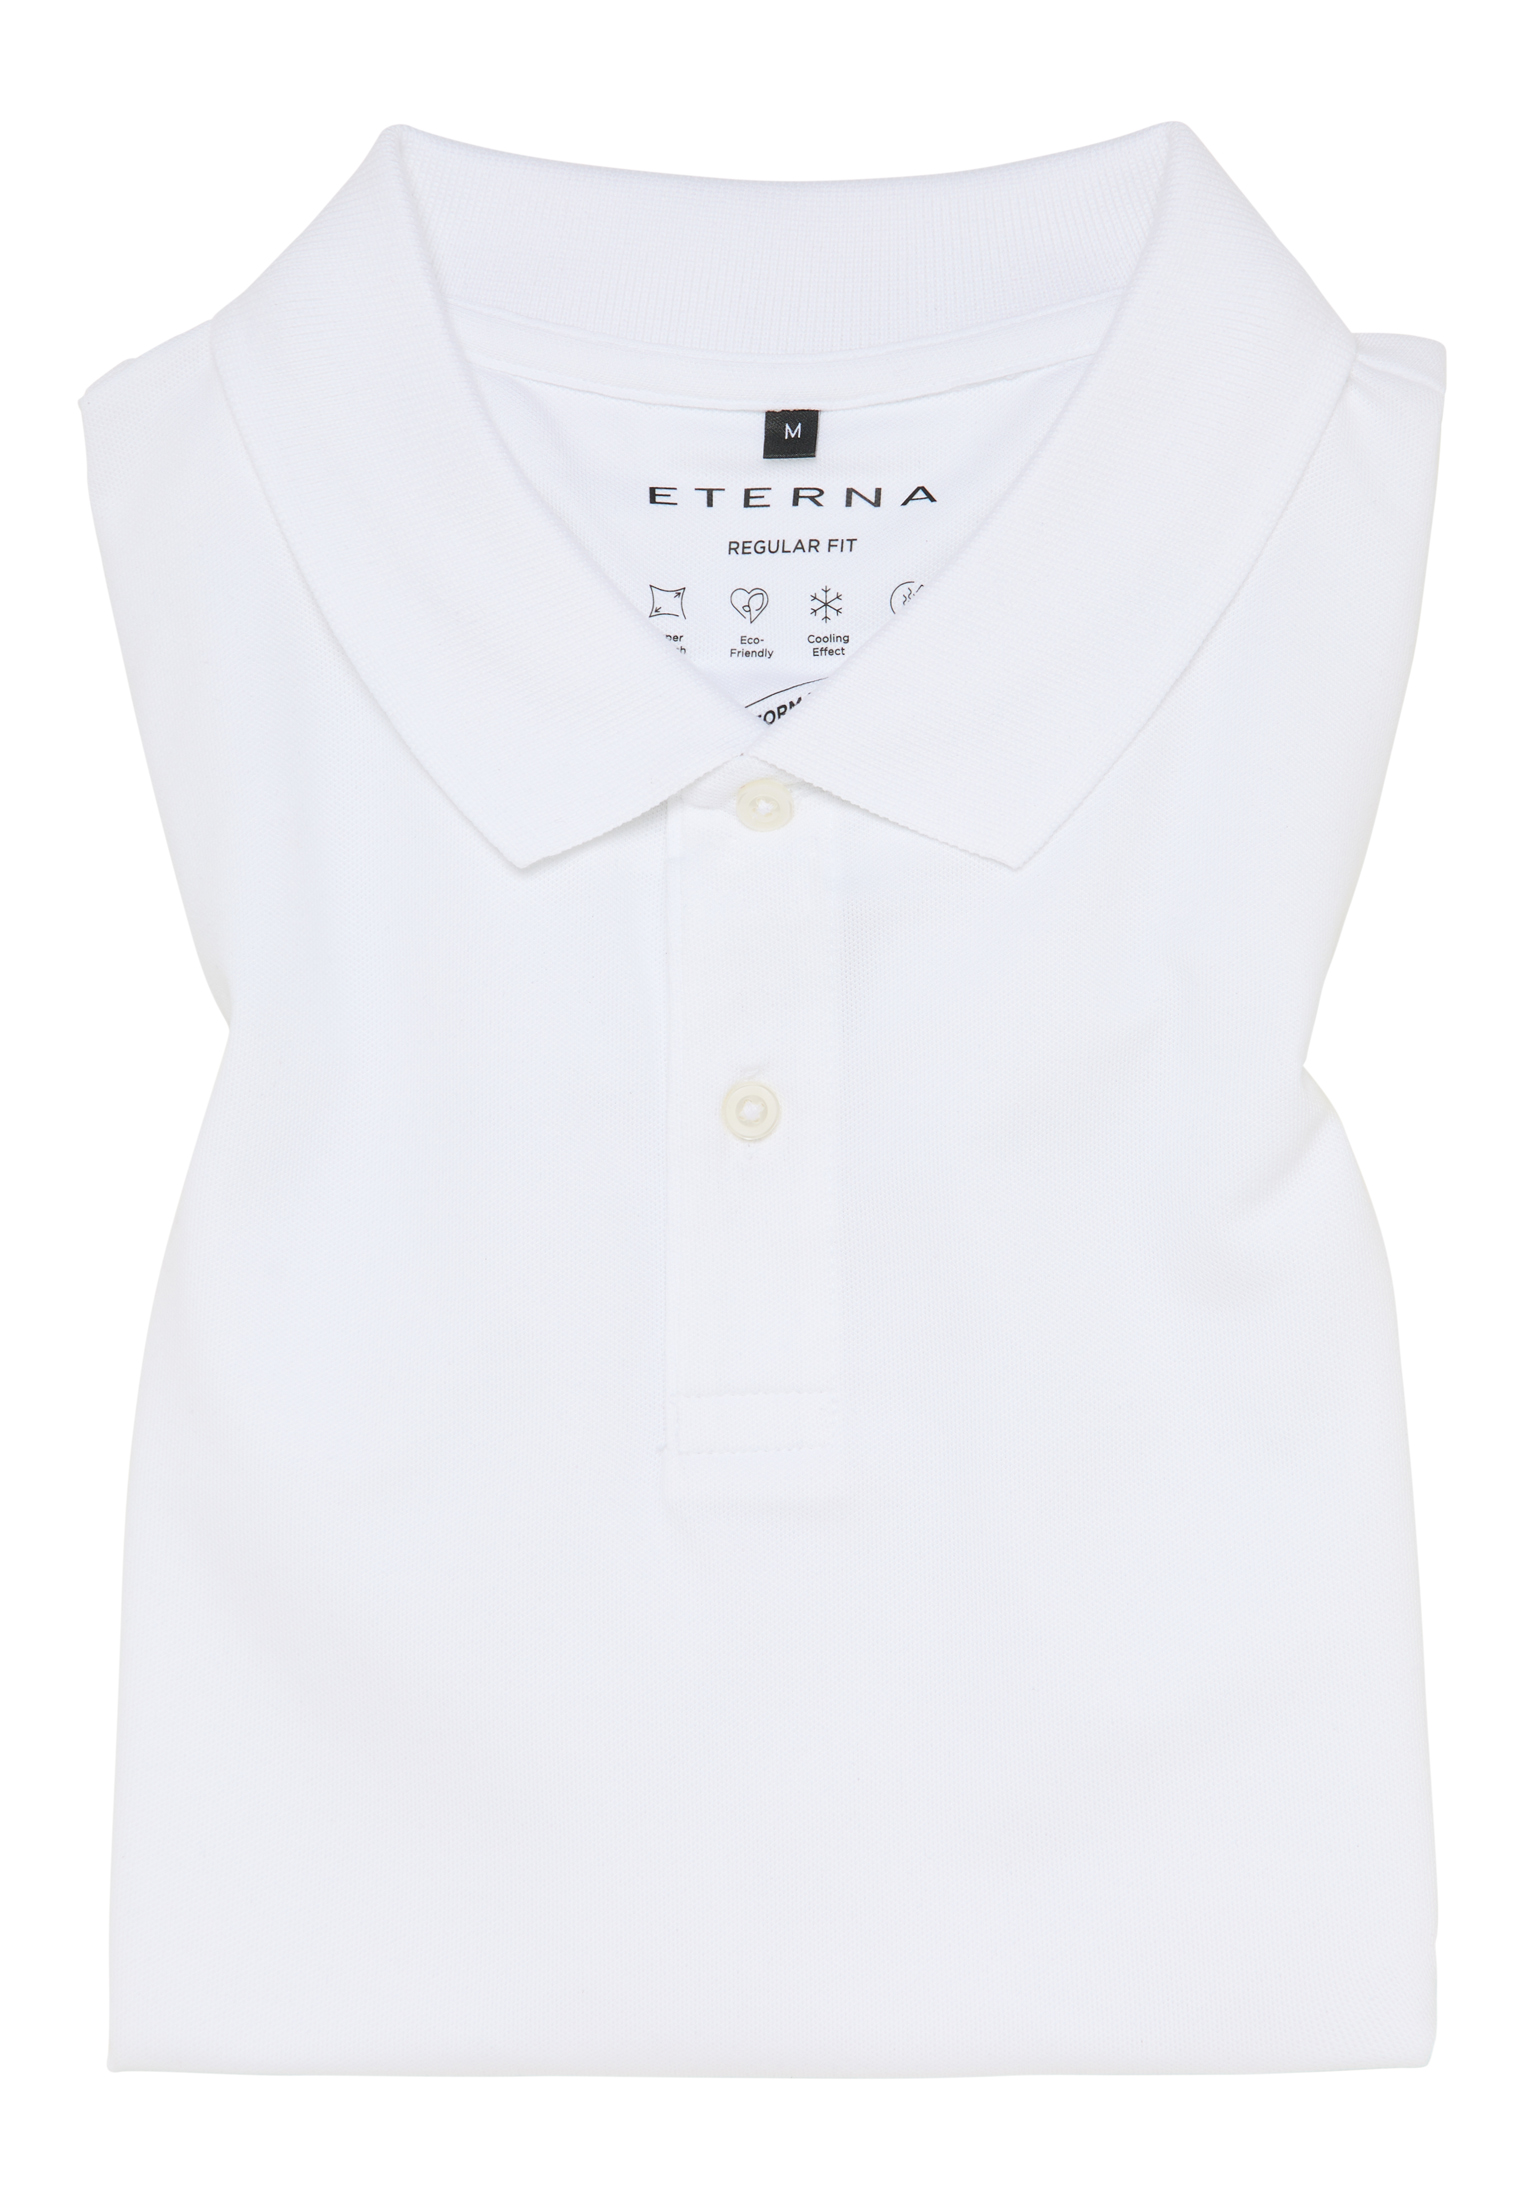 MODERN FIT Polo shirt in | plain short | white white 42 sleeve | | 1SP00175-00-01-42-1/2